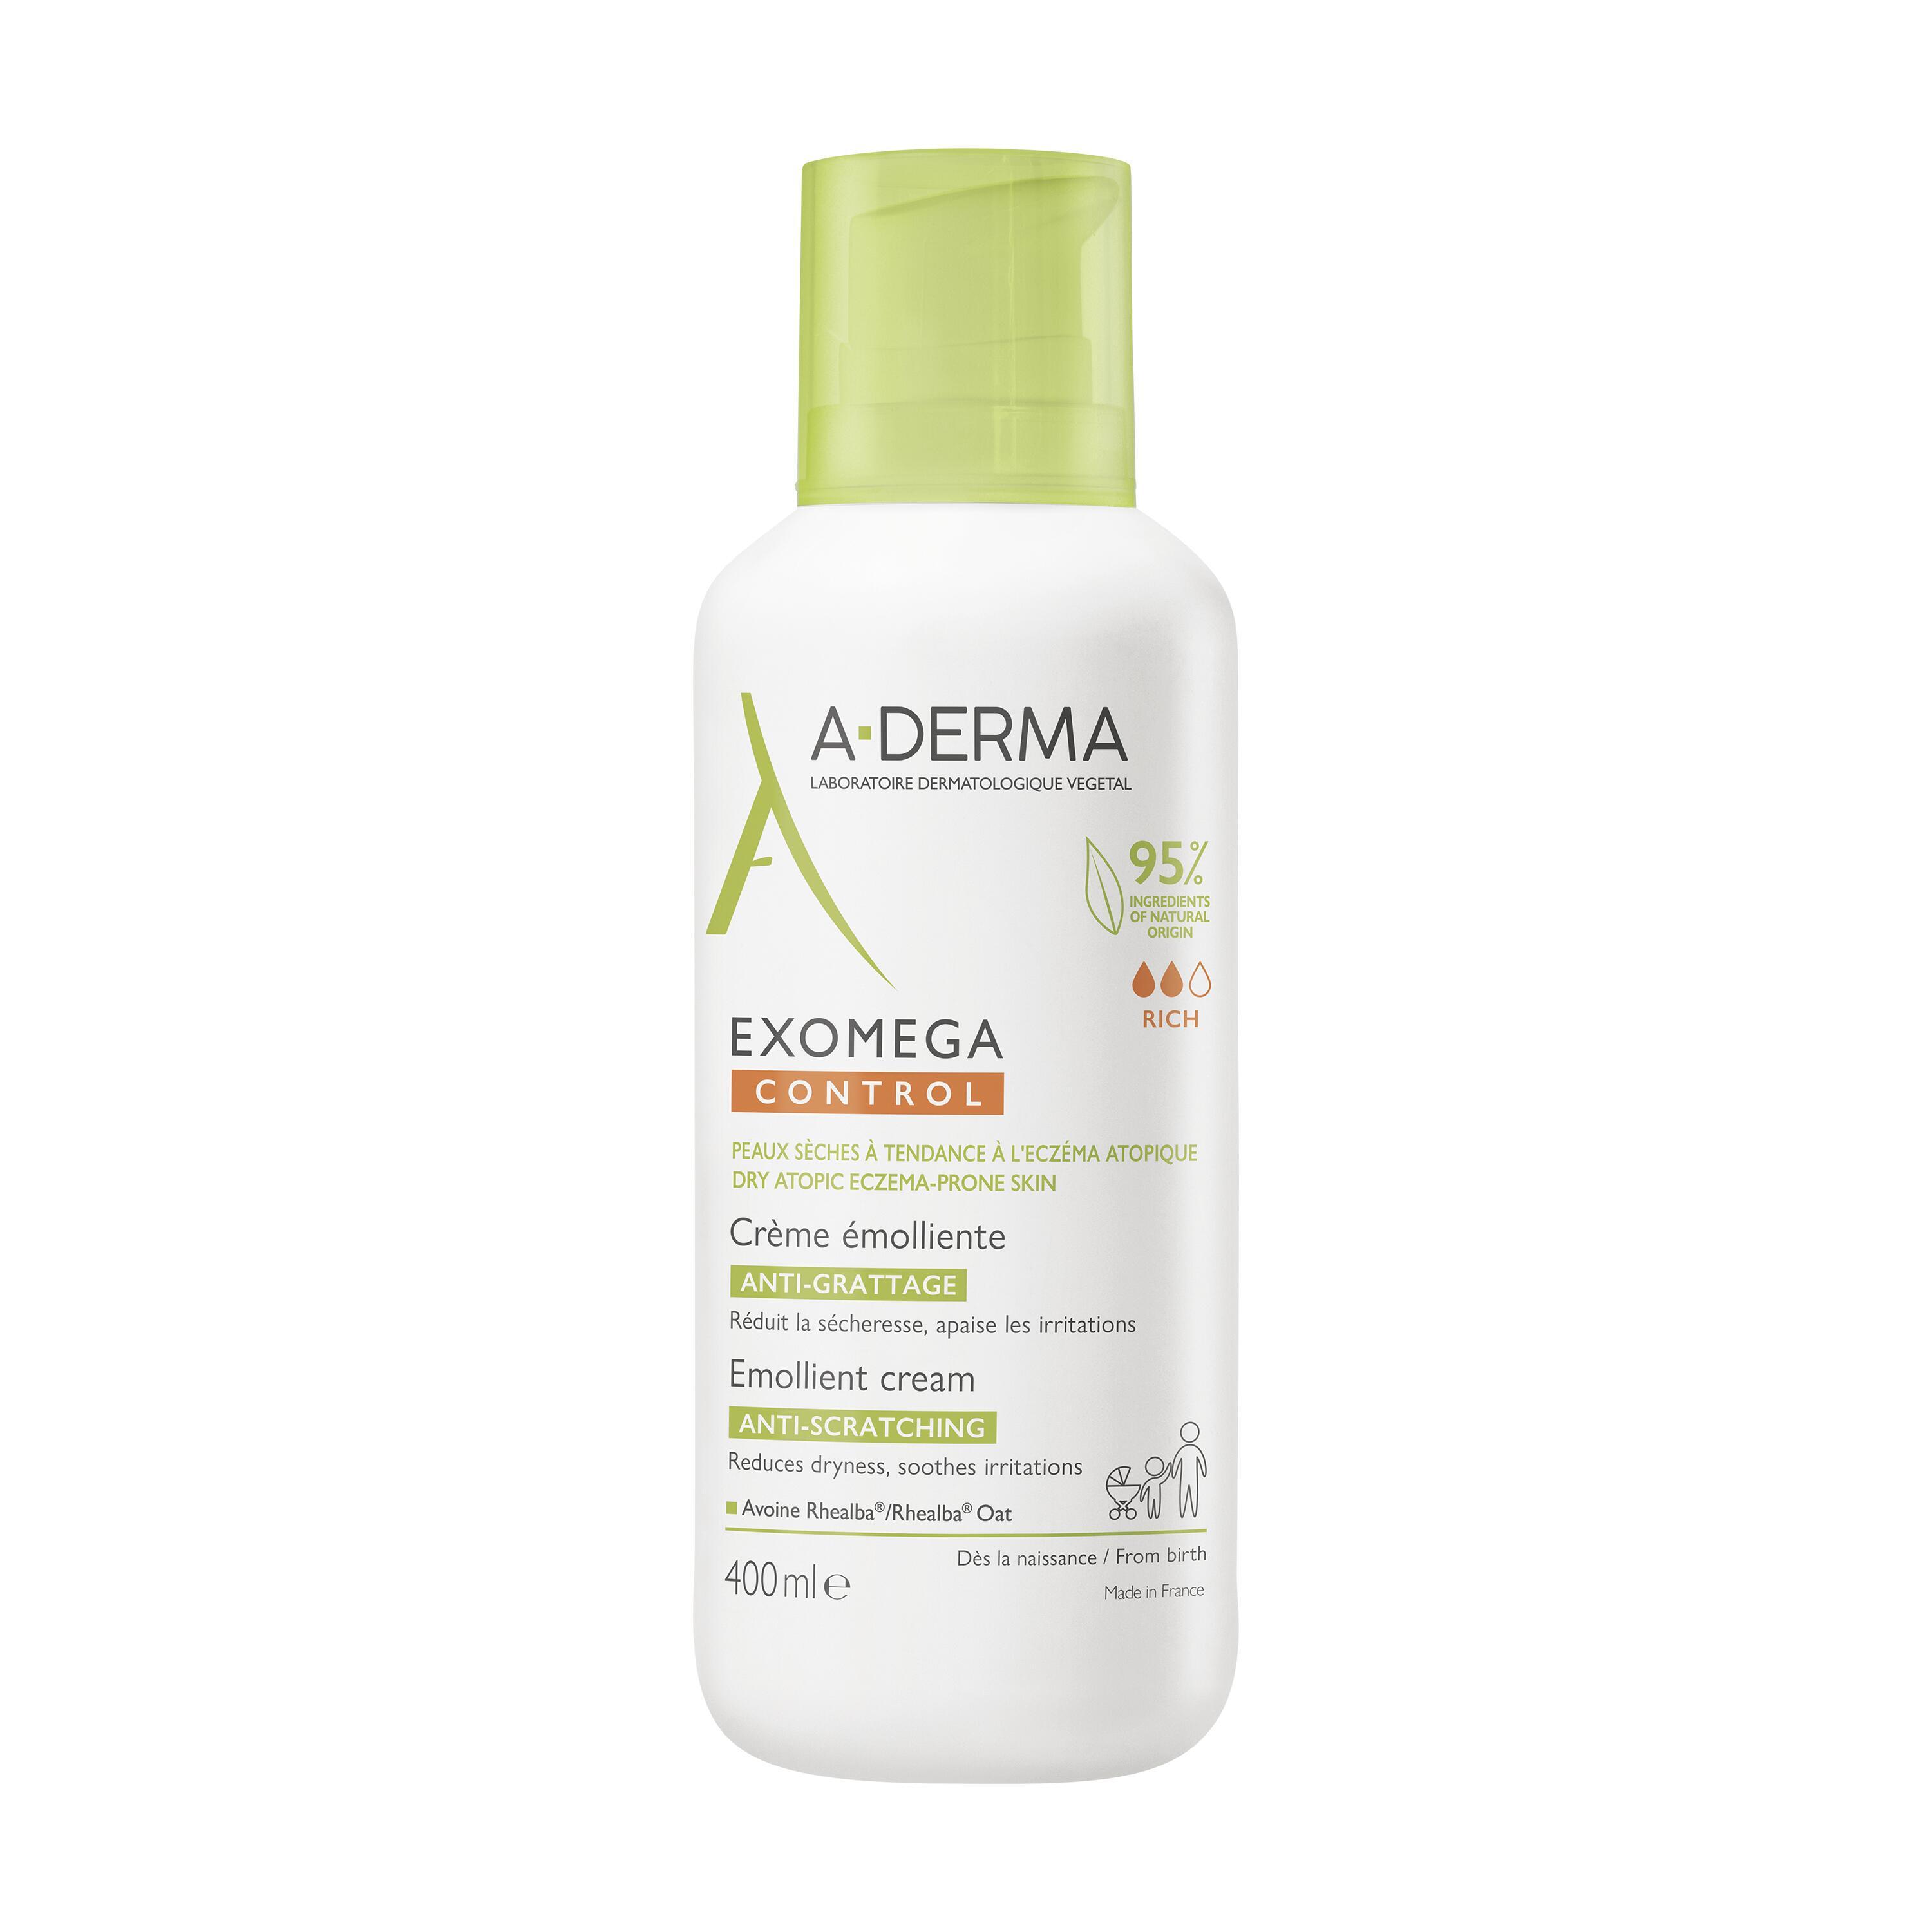 A-derma Exomega Control Crema Emolliente Anti-grattage 400ml